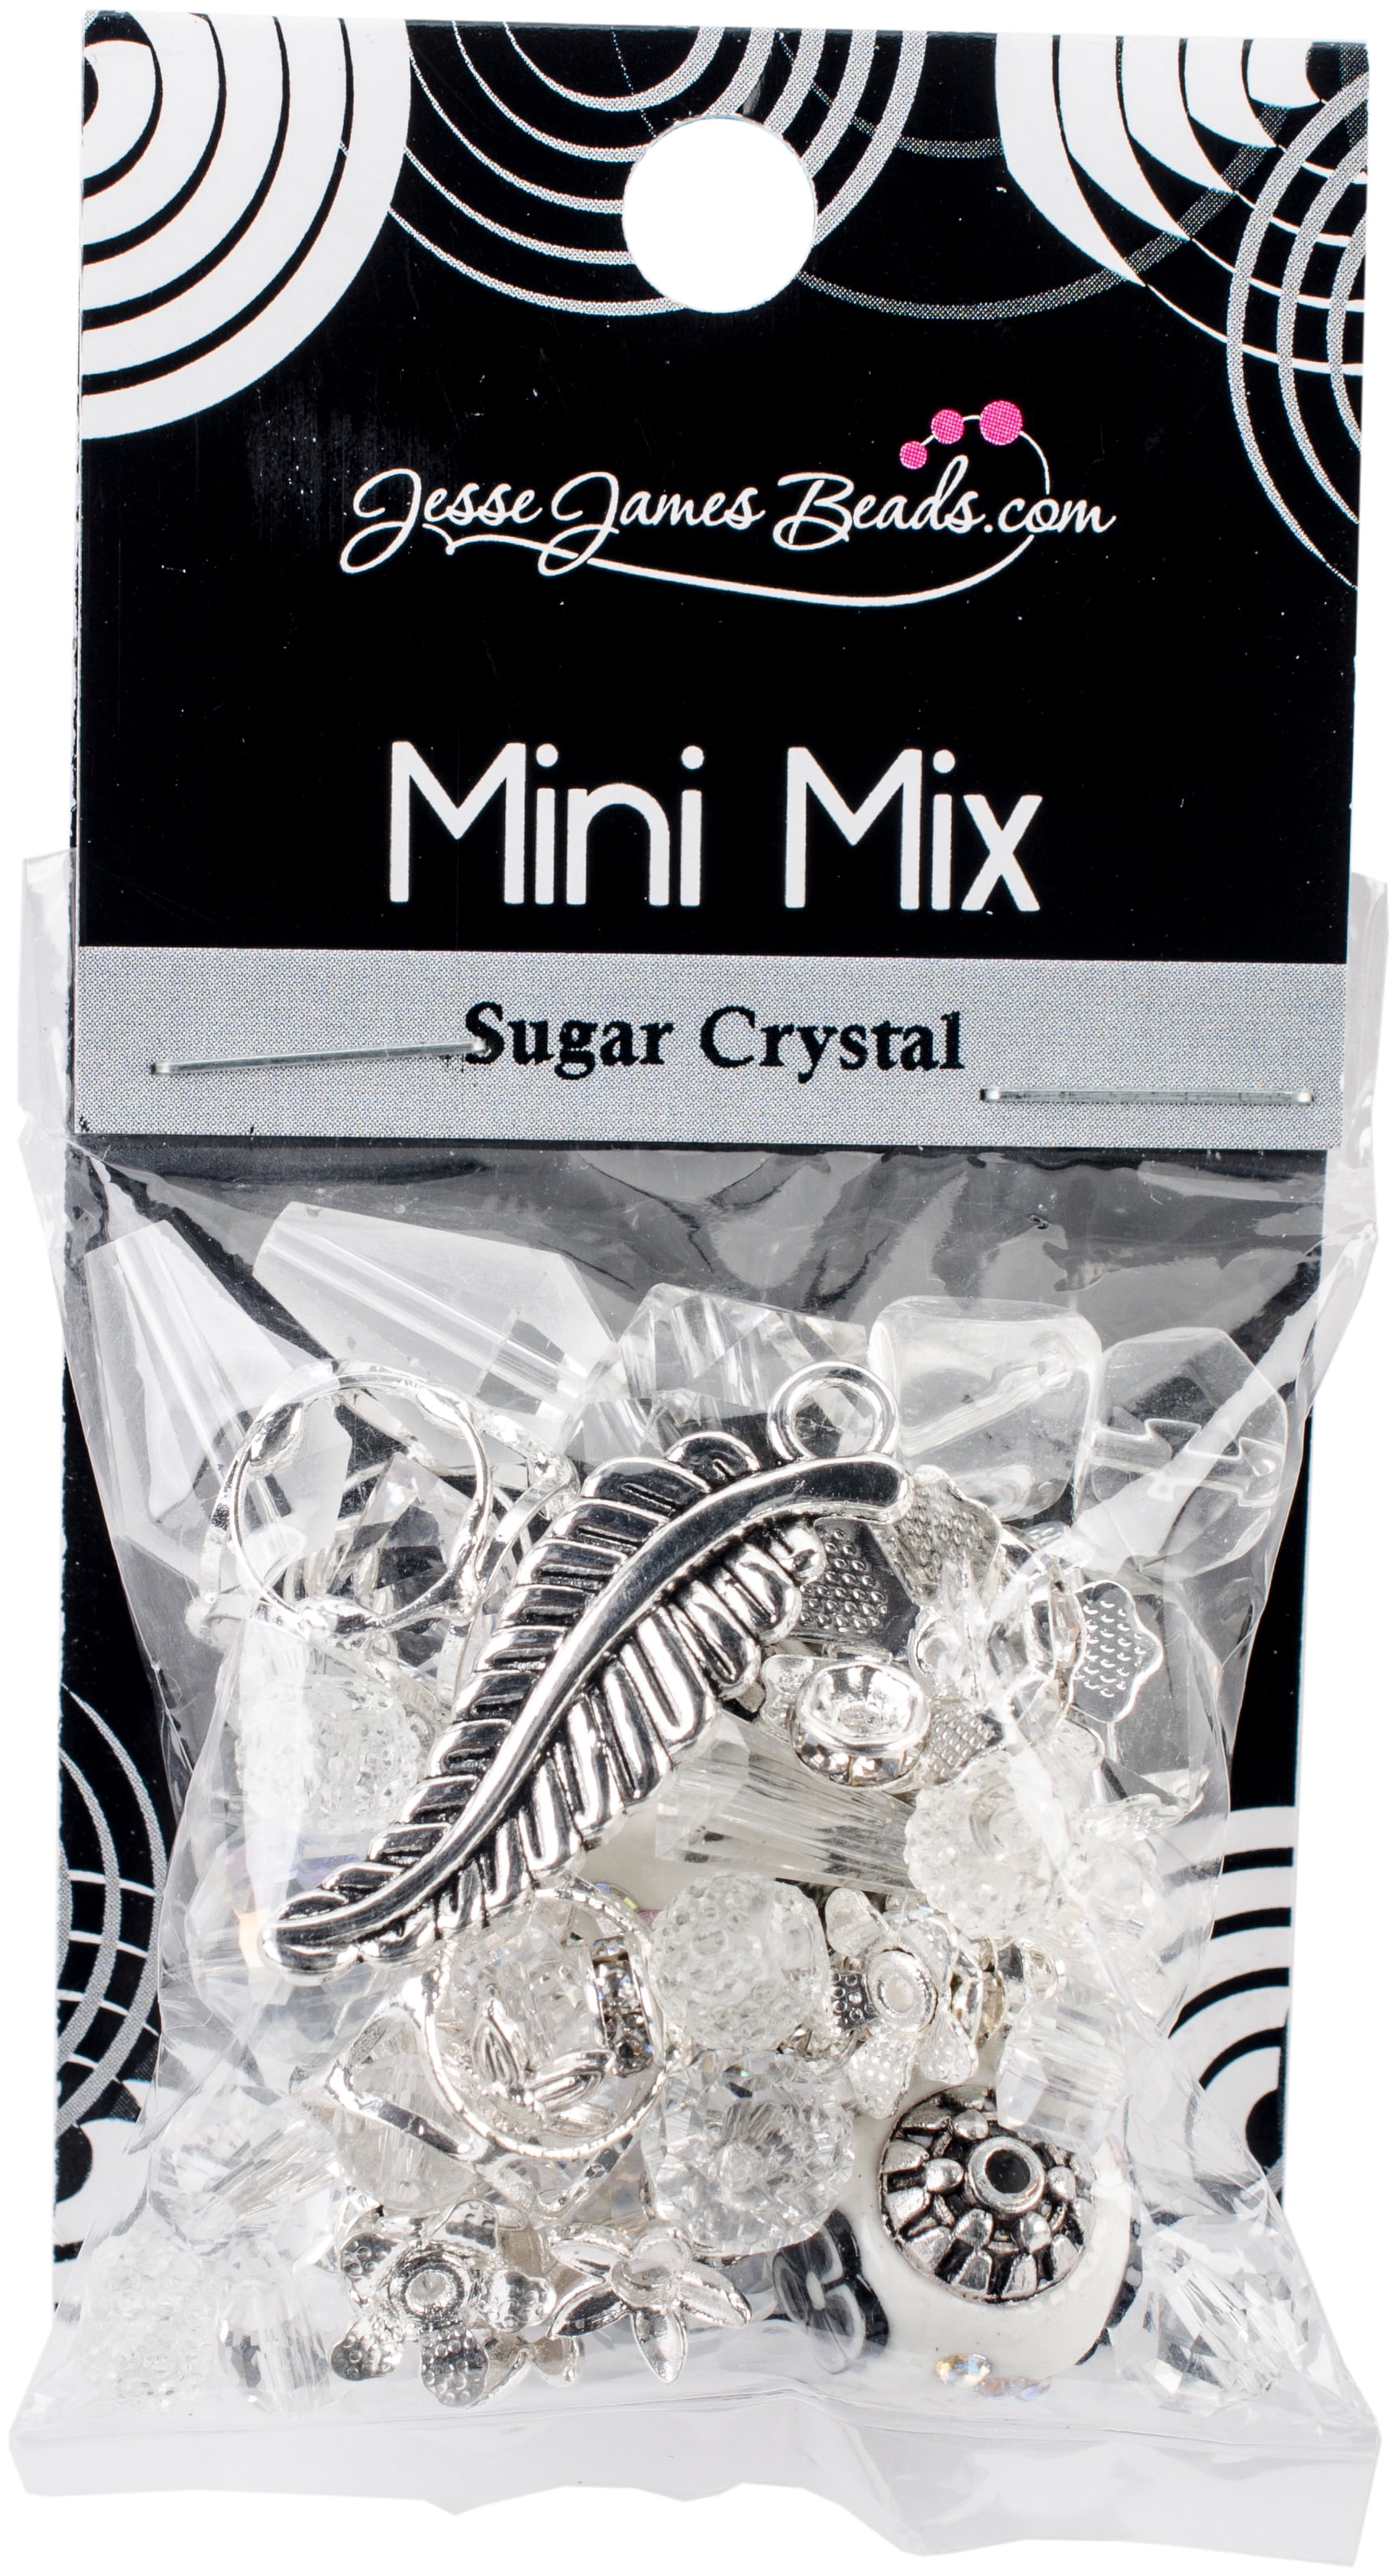 Jesse James Beads Mixed Media Mini Bead Mix in Sugar Crystal